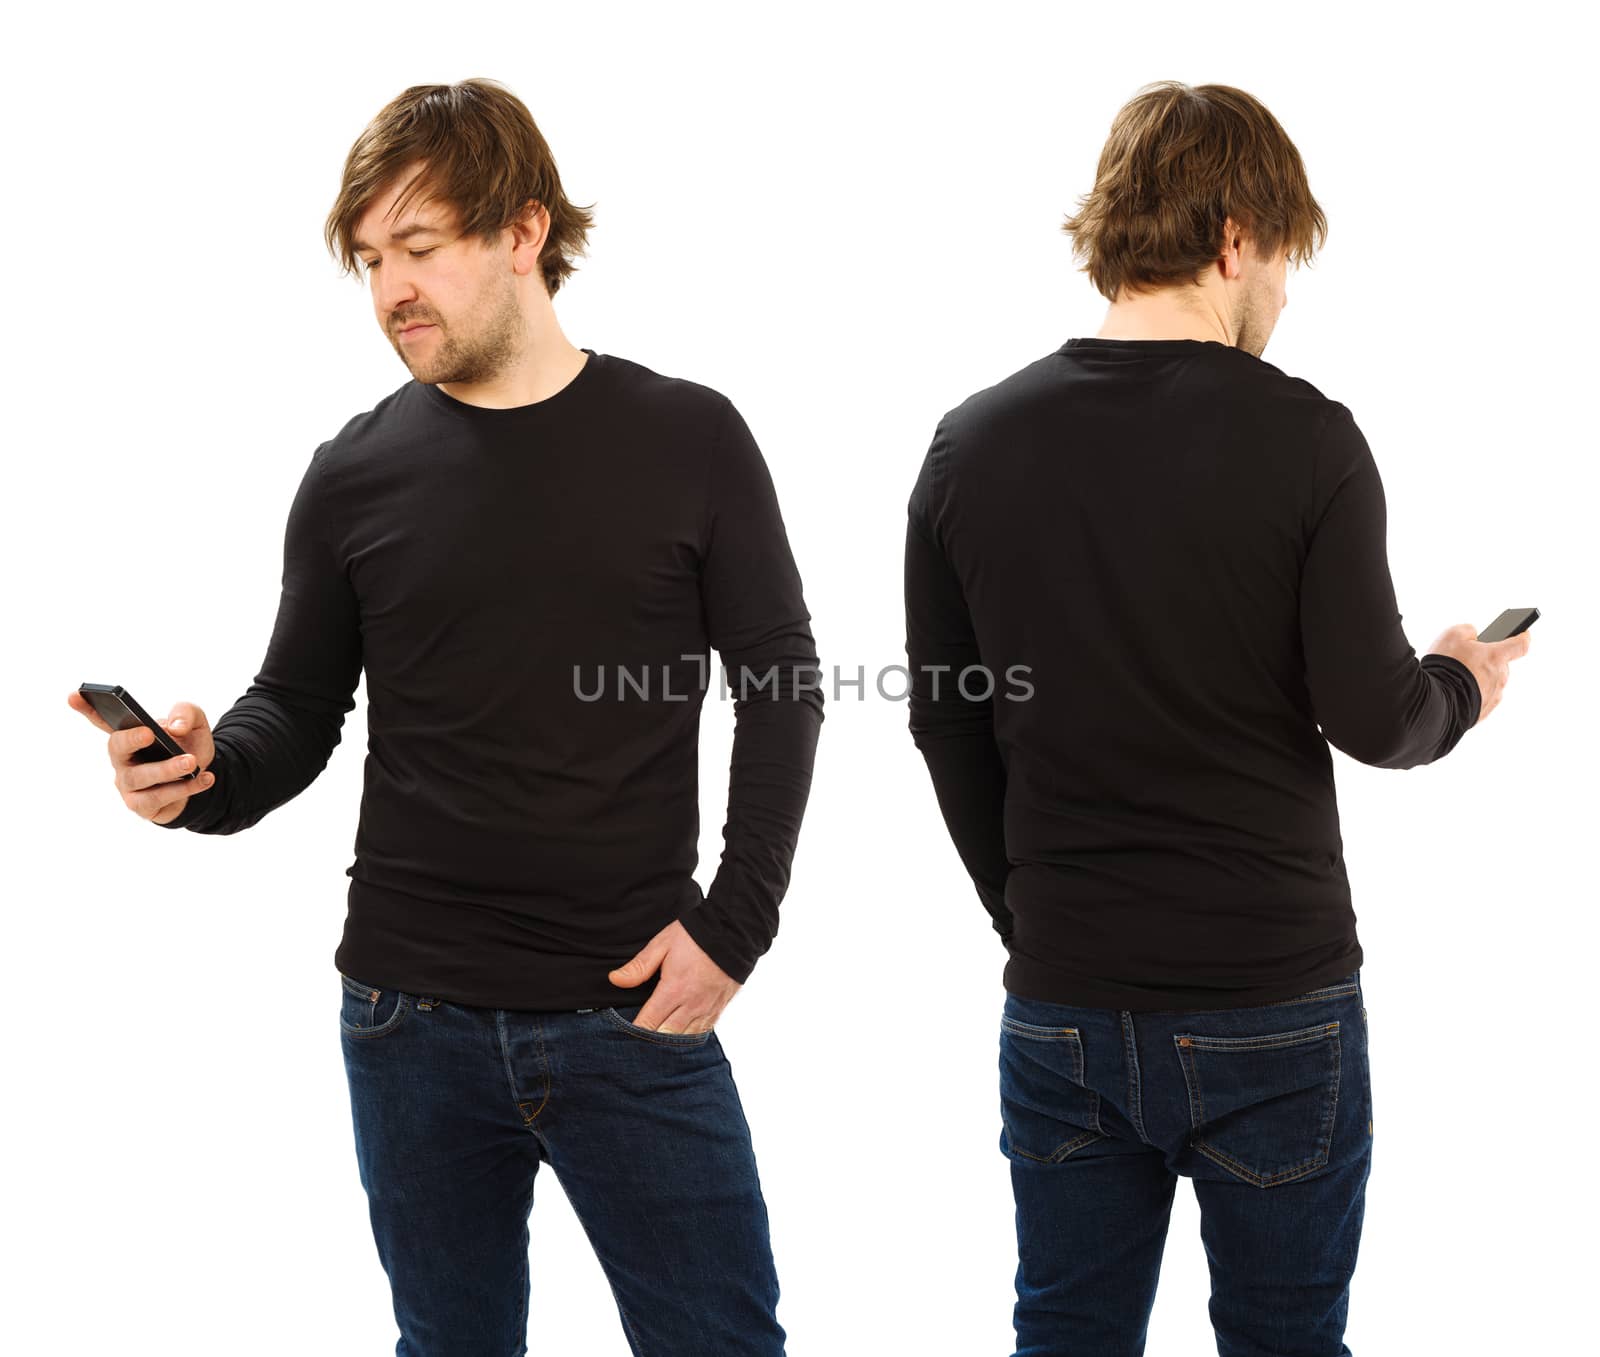 Man wearing blank black shirt holding phone by sumners